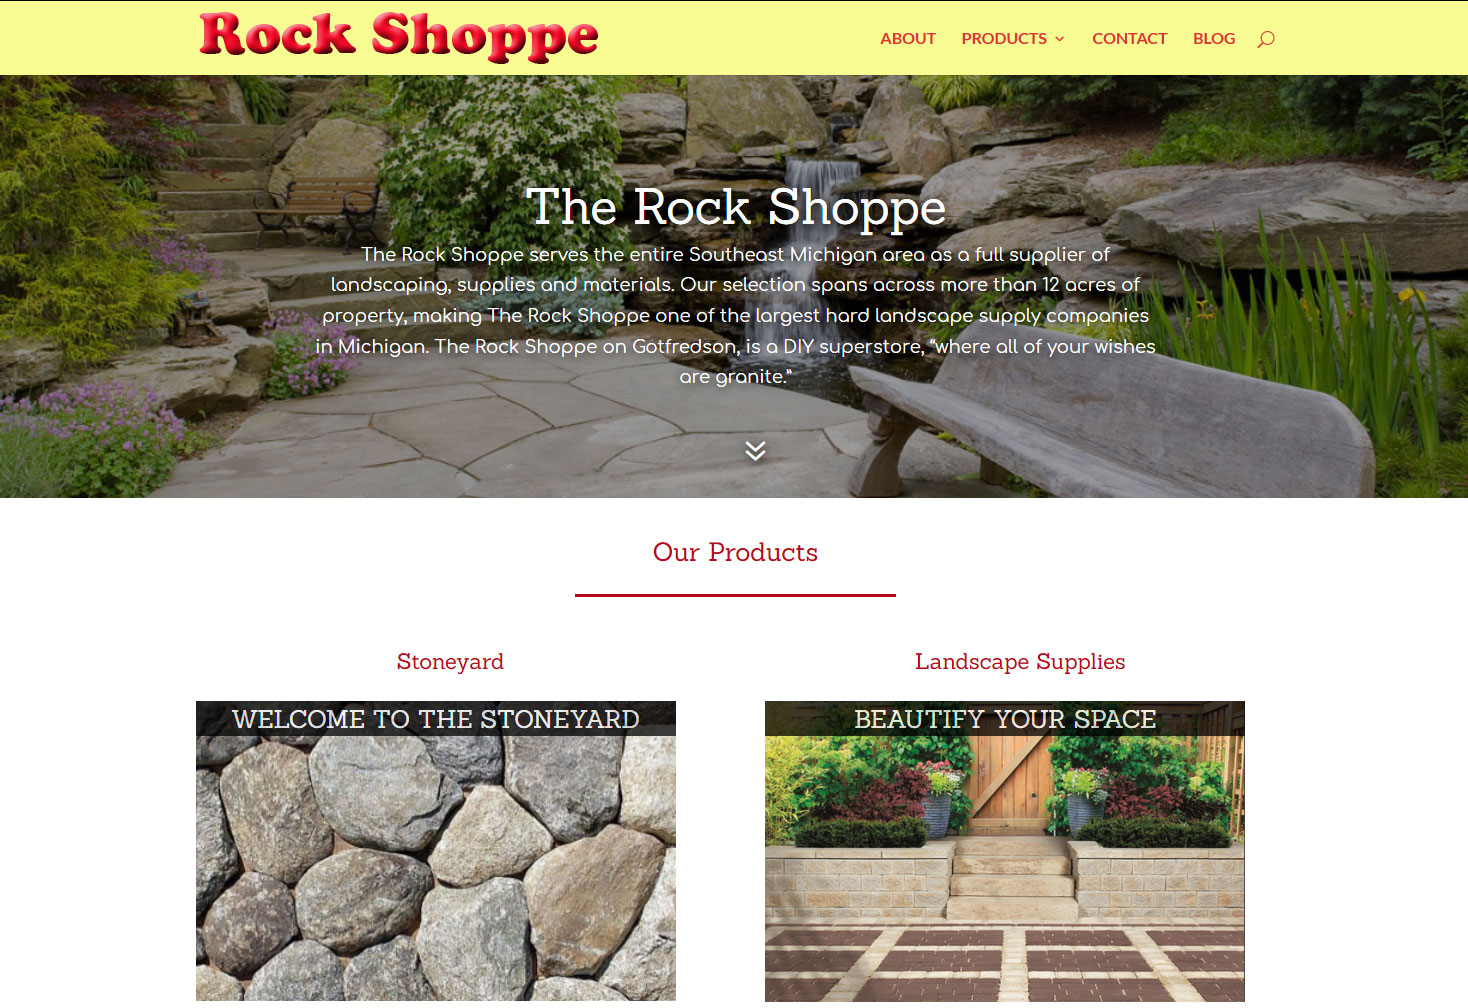 The Rock Shoppe